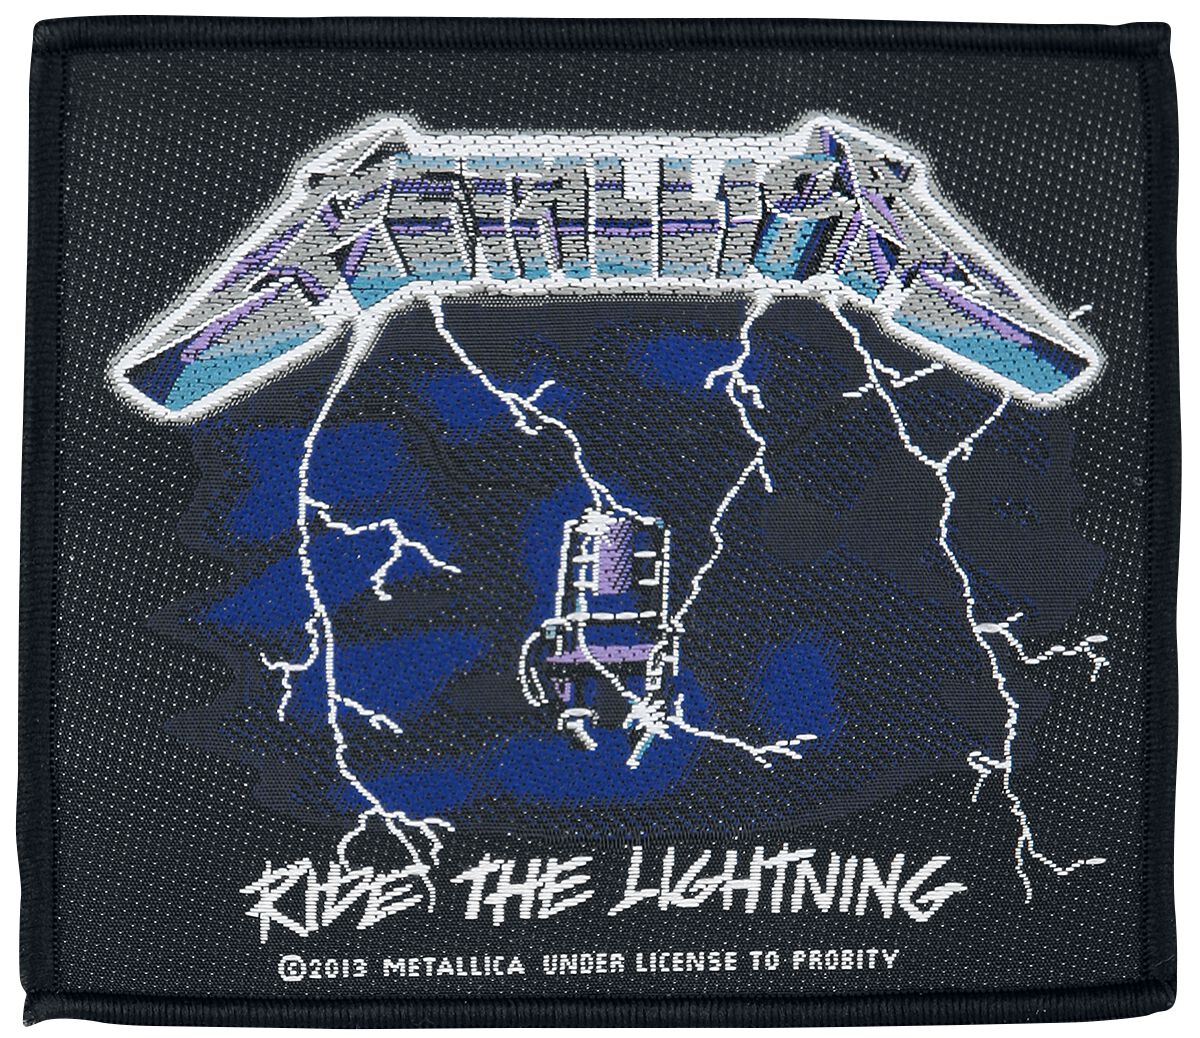 Patch de Metallica - Ride The Lightning - pour Unisexe - noir/bleu/blanc